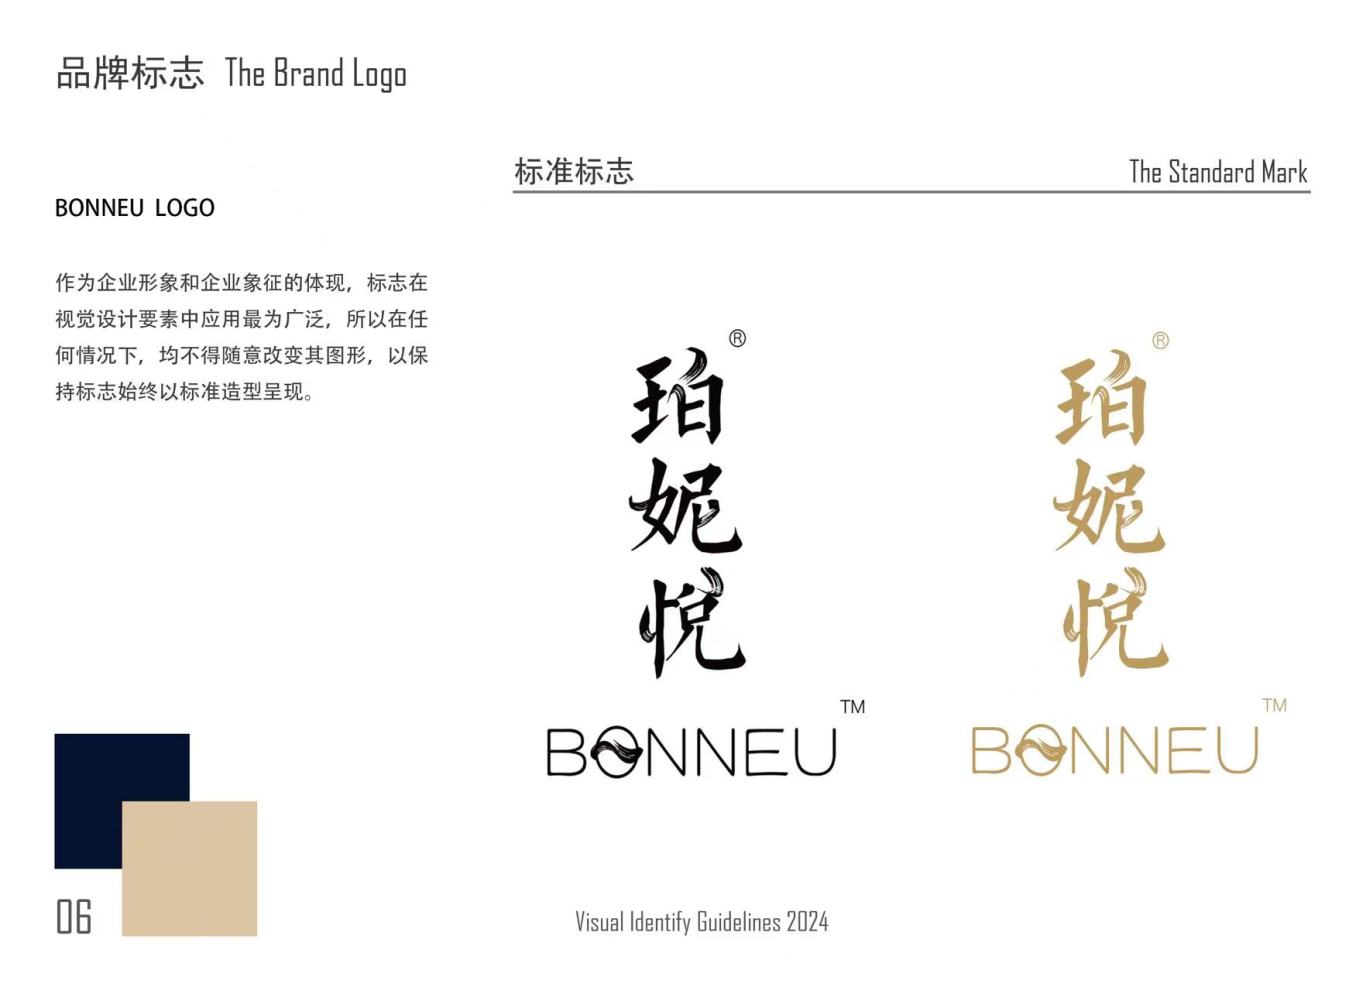 BONNEU国姿铂妮悦 民族护肤品牌 包装设计及品牌策划图5